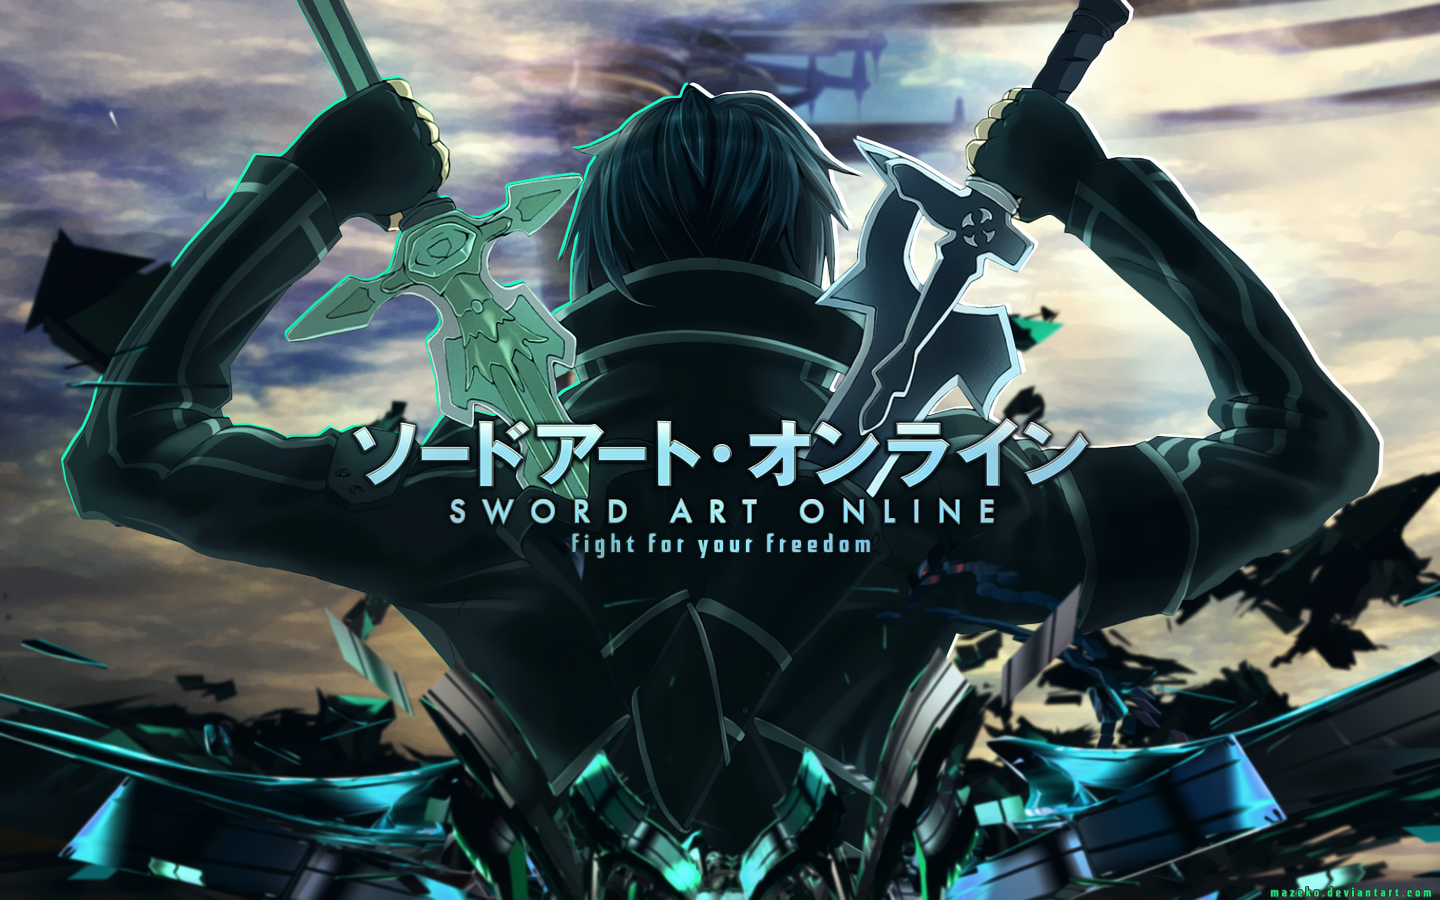 Sword Art Online | Pixcelation Entertainment